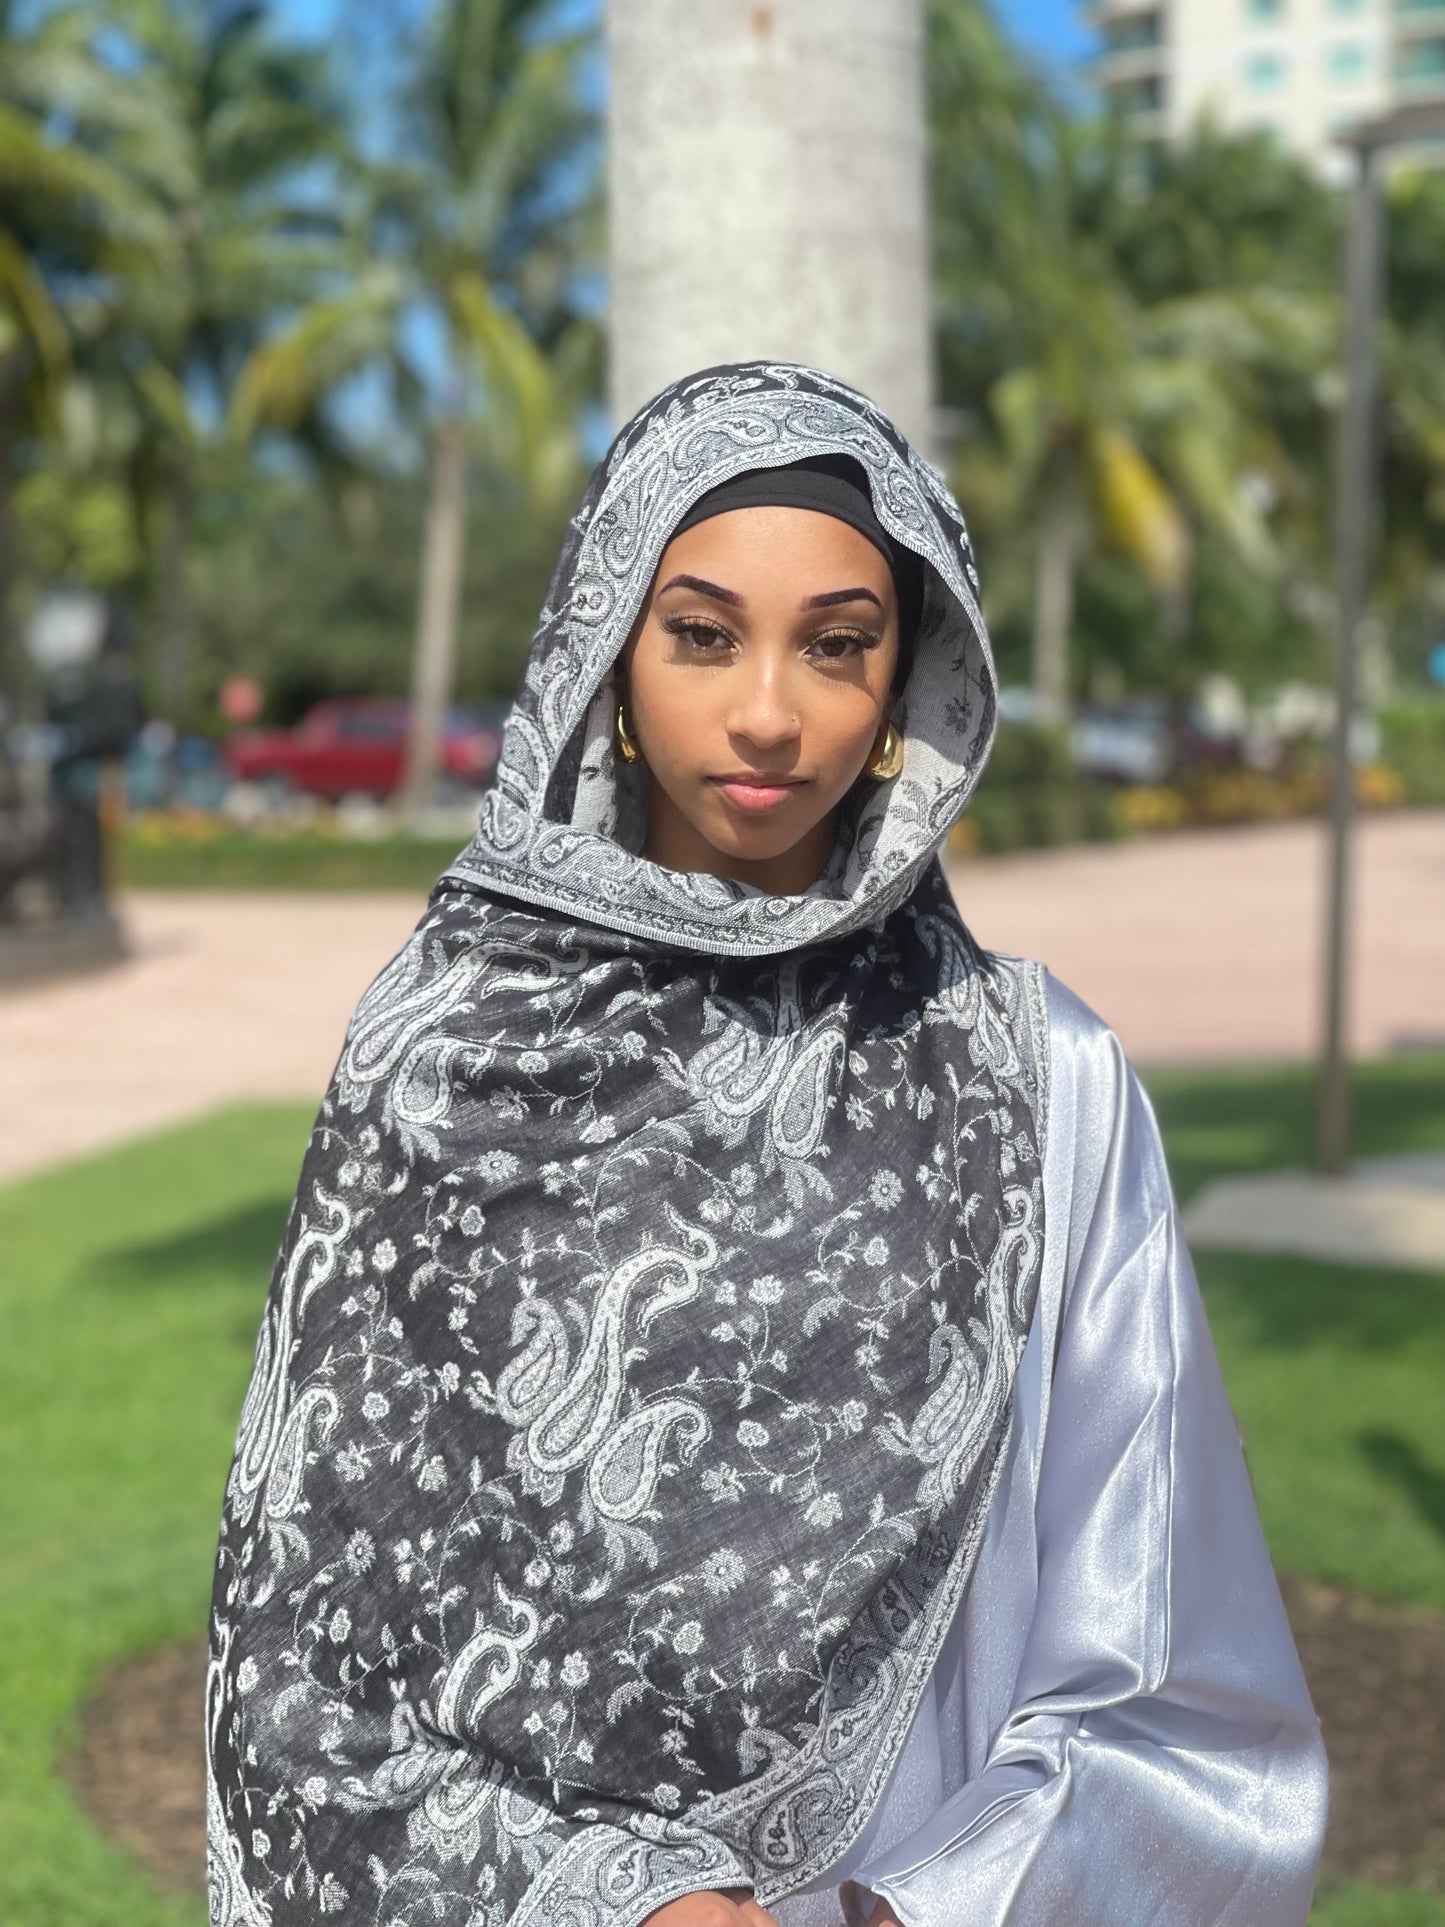 Moonlight Hijab